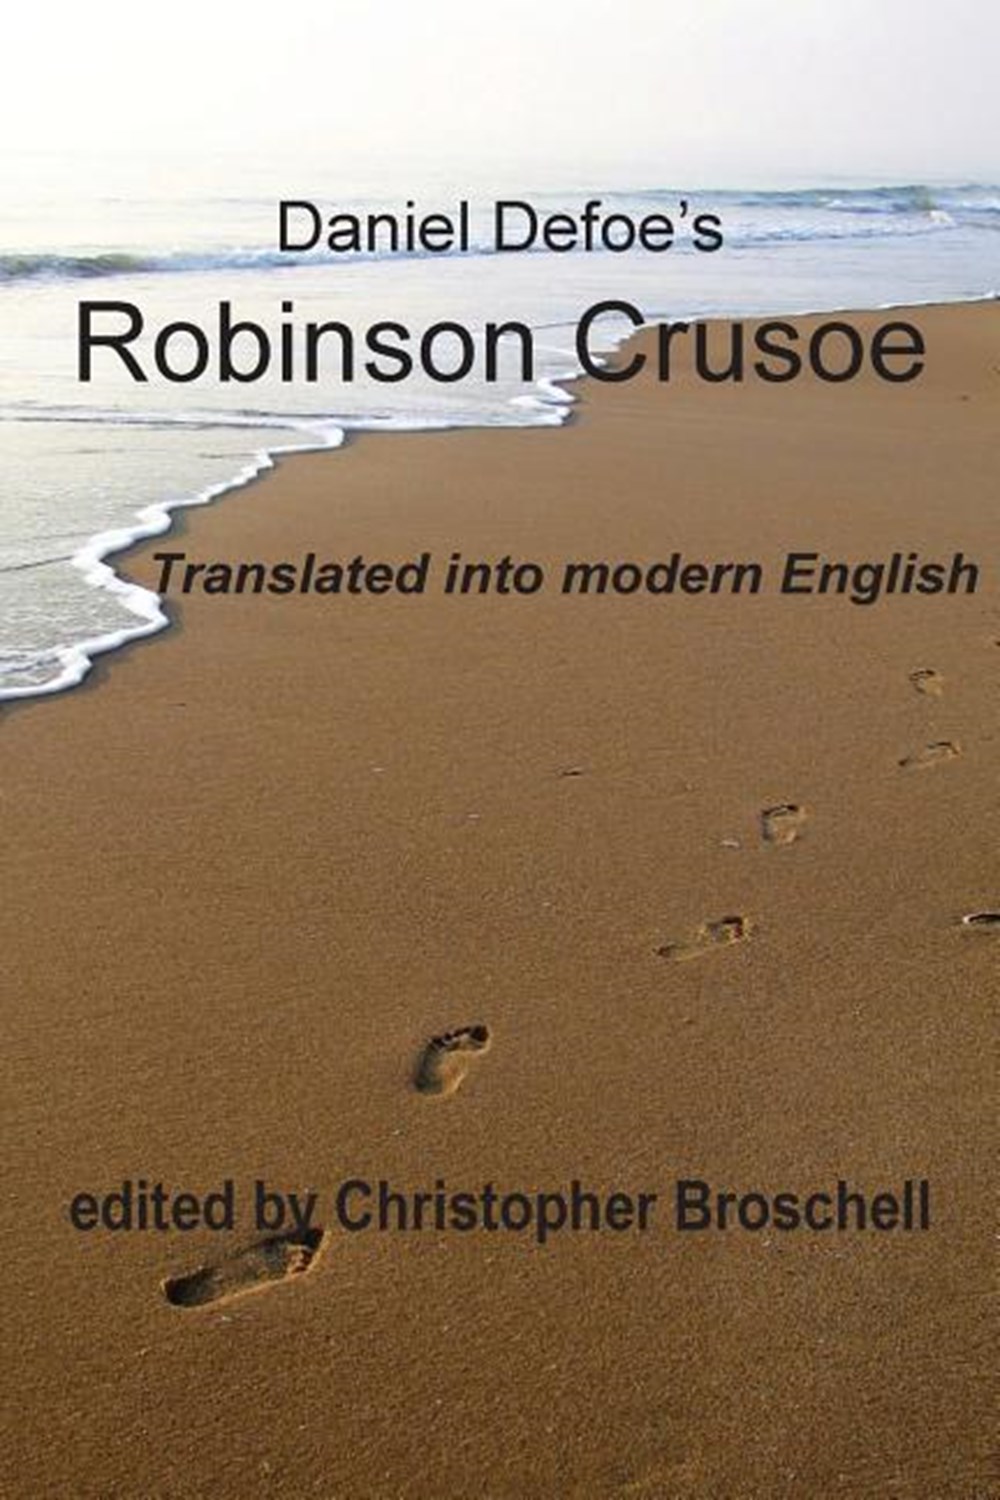 Robinson Crusoe: Modern English Translation